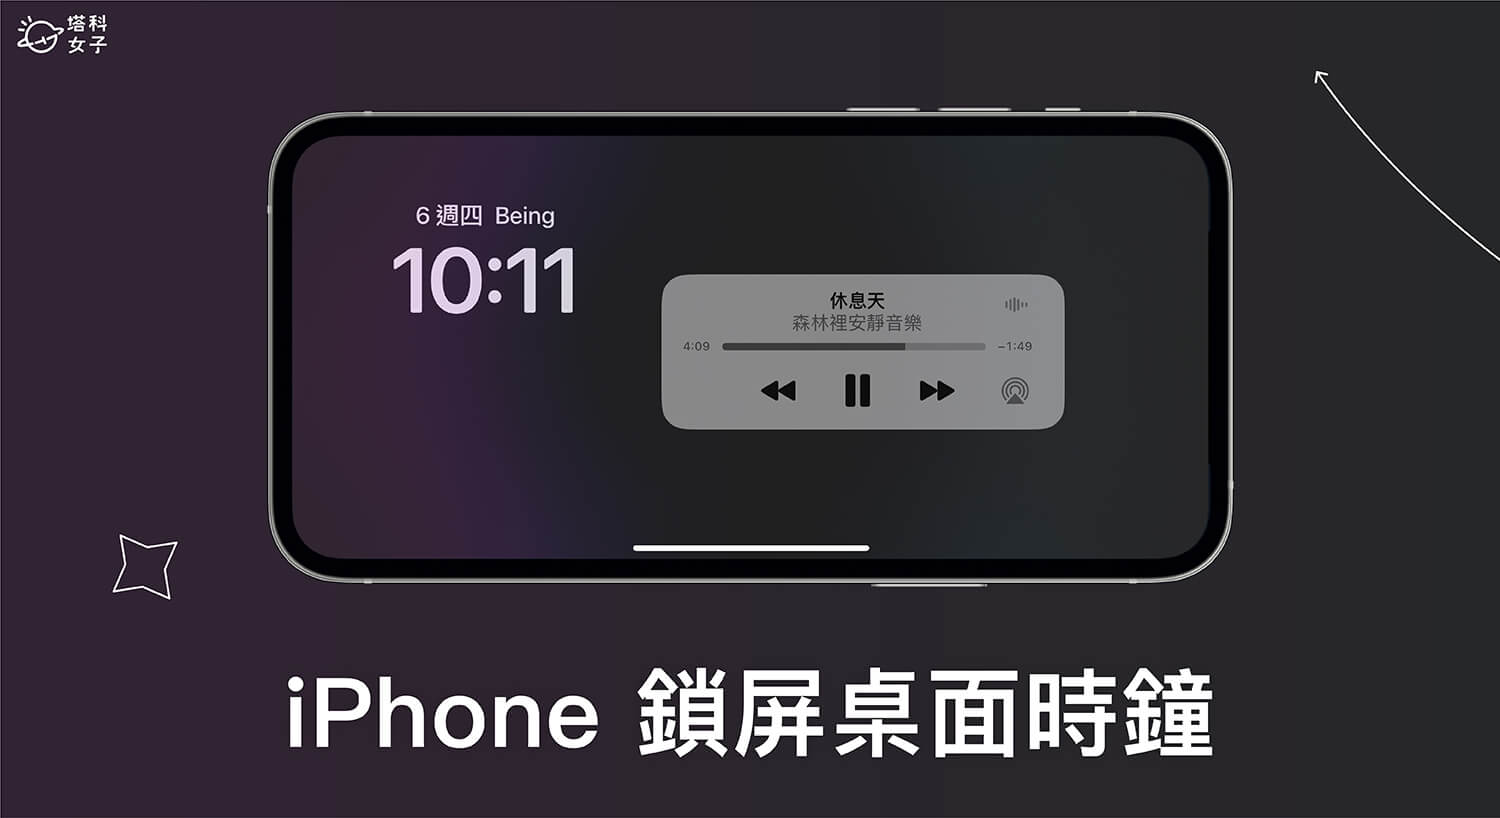 iPhone 锁定画面横向桌面时钟模式显示时间及正在播放的音乐，免下载 APP